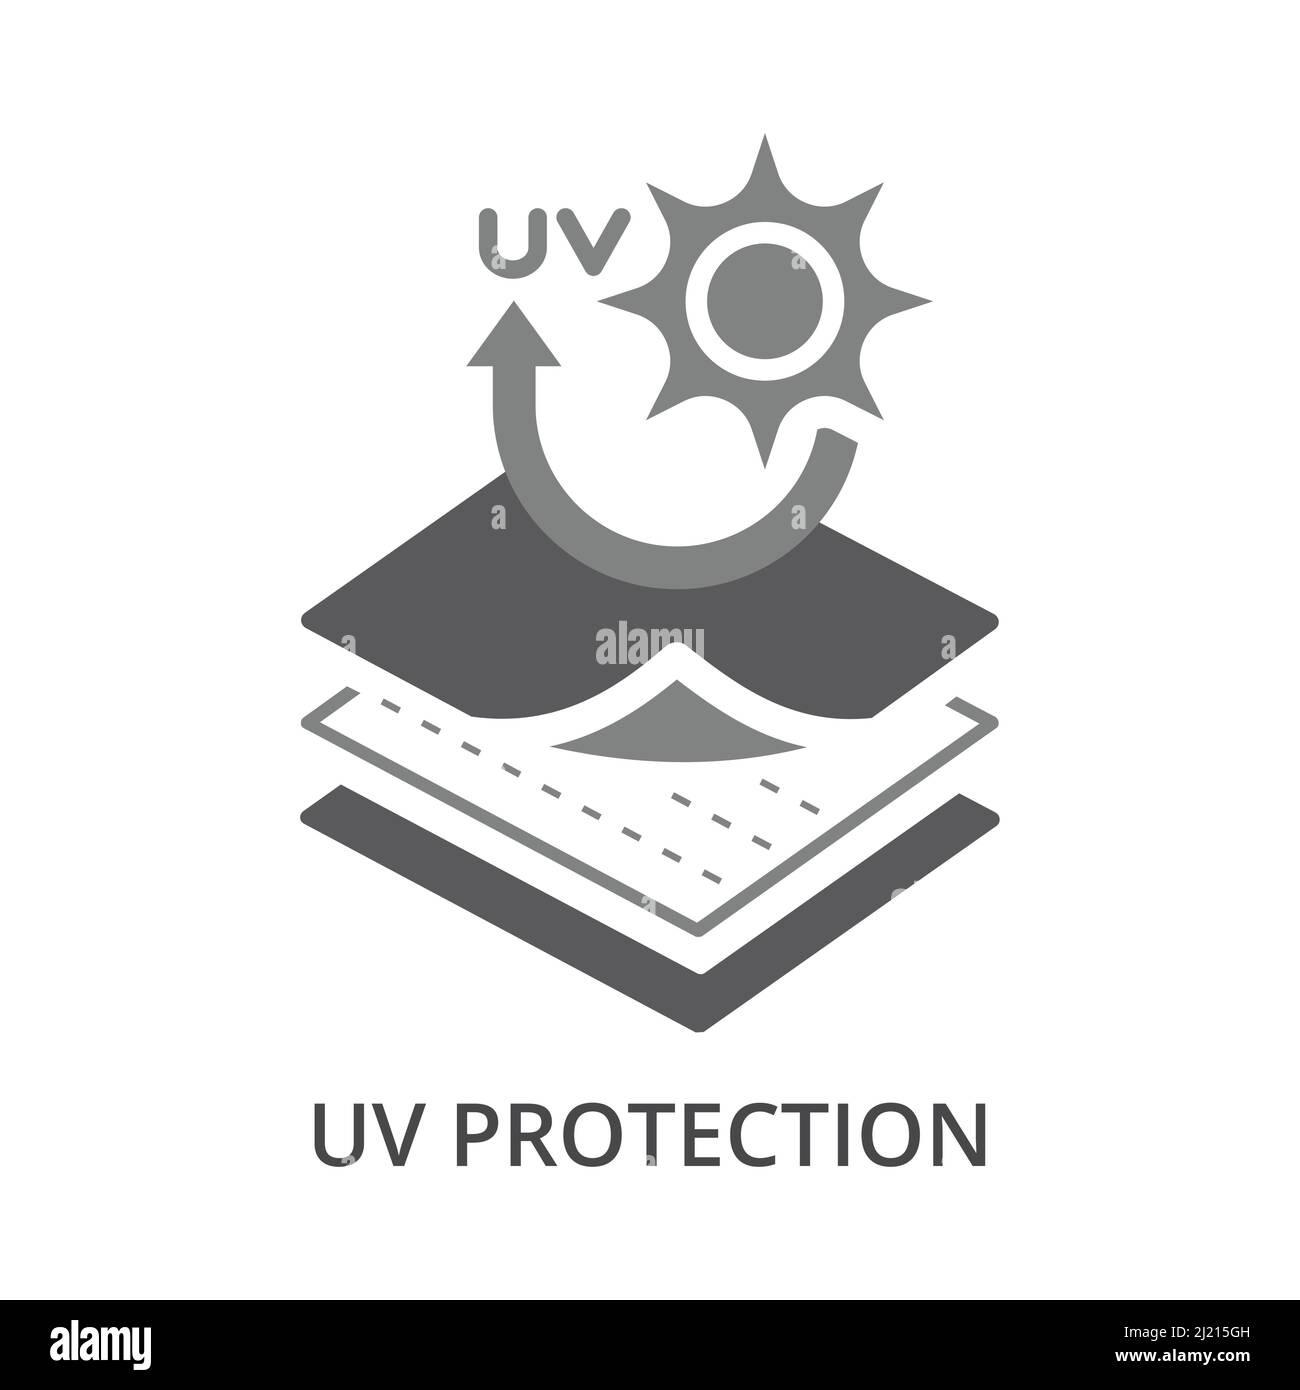 UV protection menswear